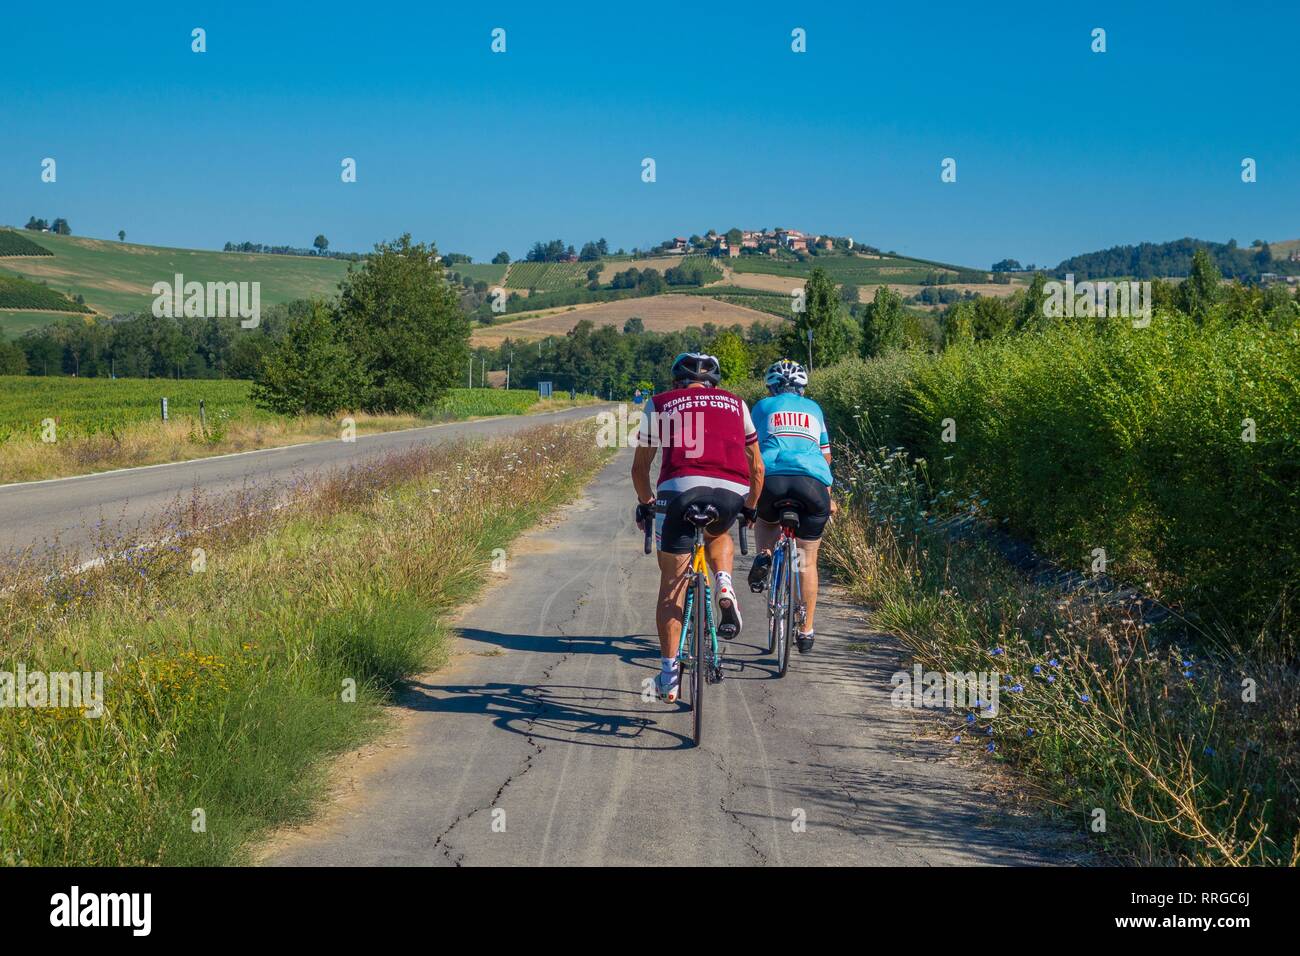 On the Fausto Coppi's roads, the cycling road from Villaromagnano to Castellania, Tortona area, Alessandria, Piedmont, Italy, Europe Stock Photo